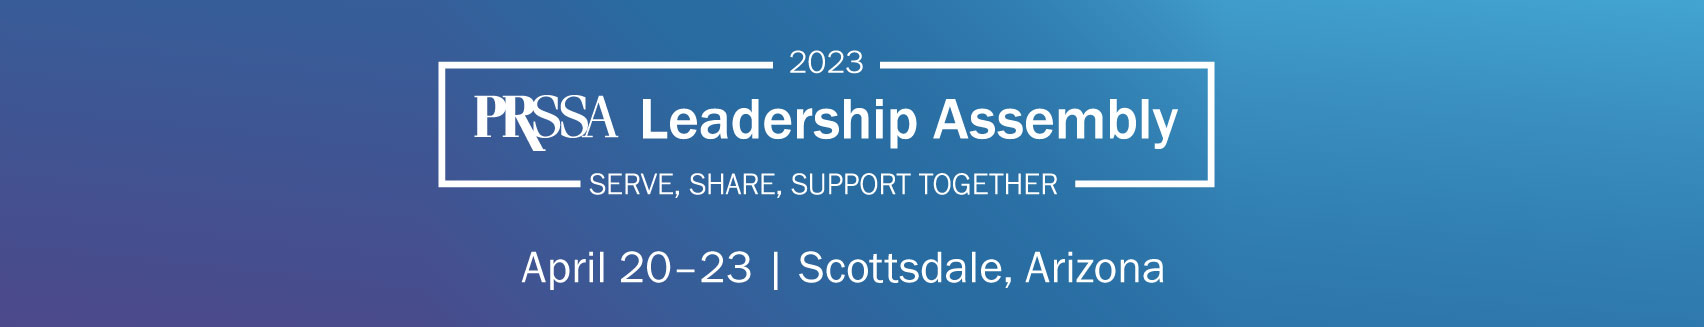 PRSSA Leadership Assembly 2021. Embrace. Empower. Explore.